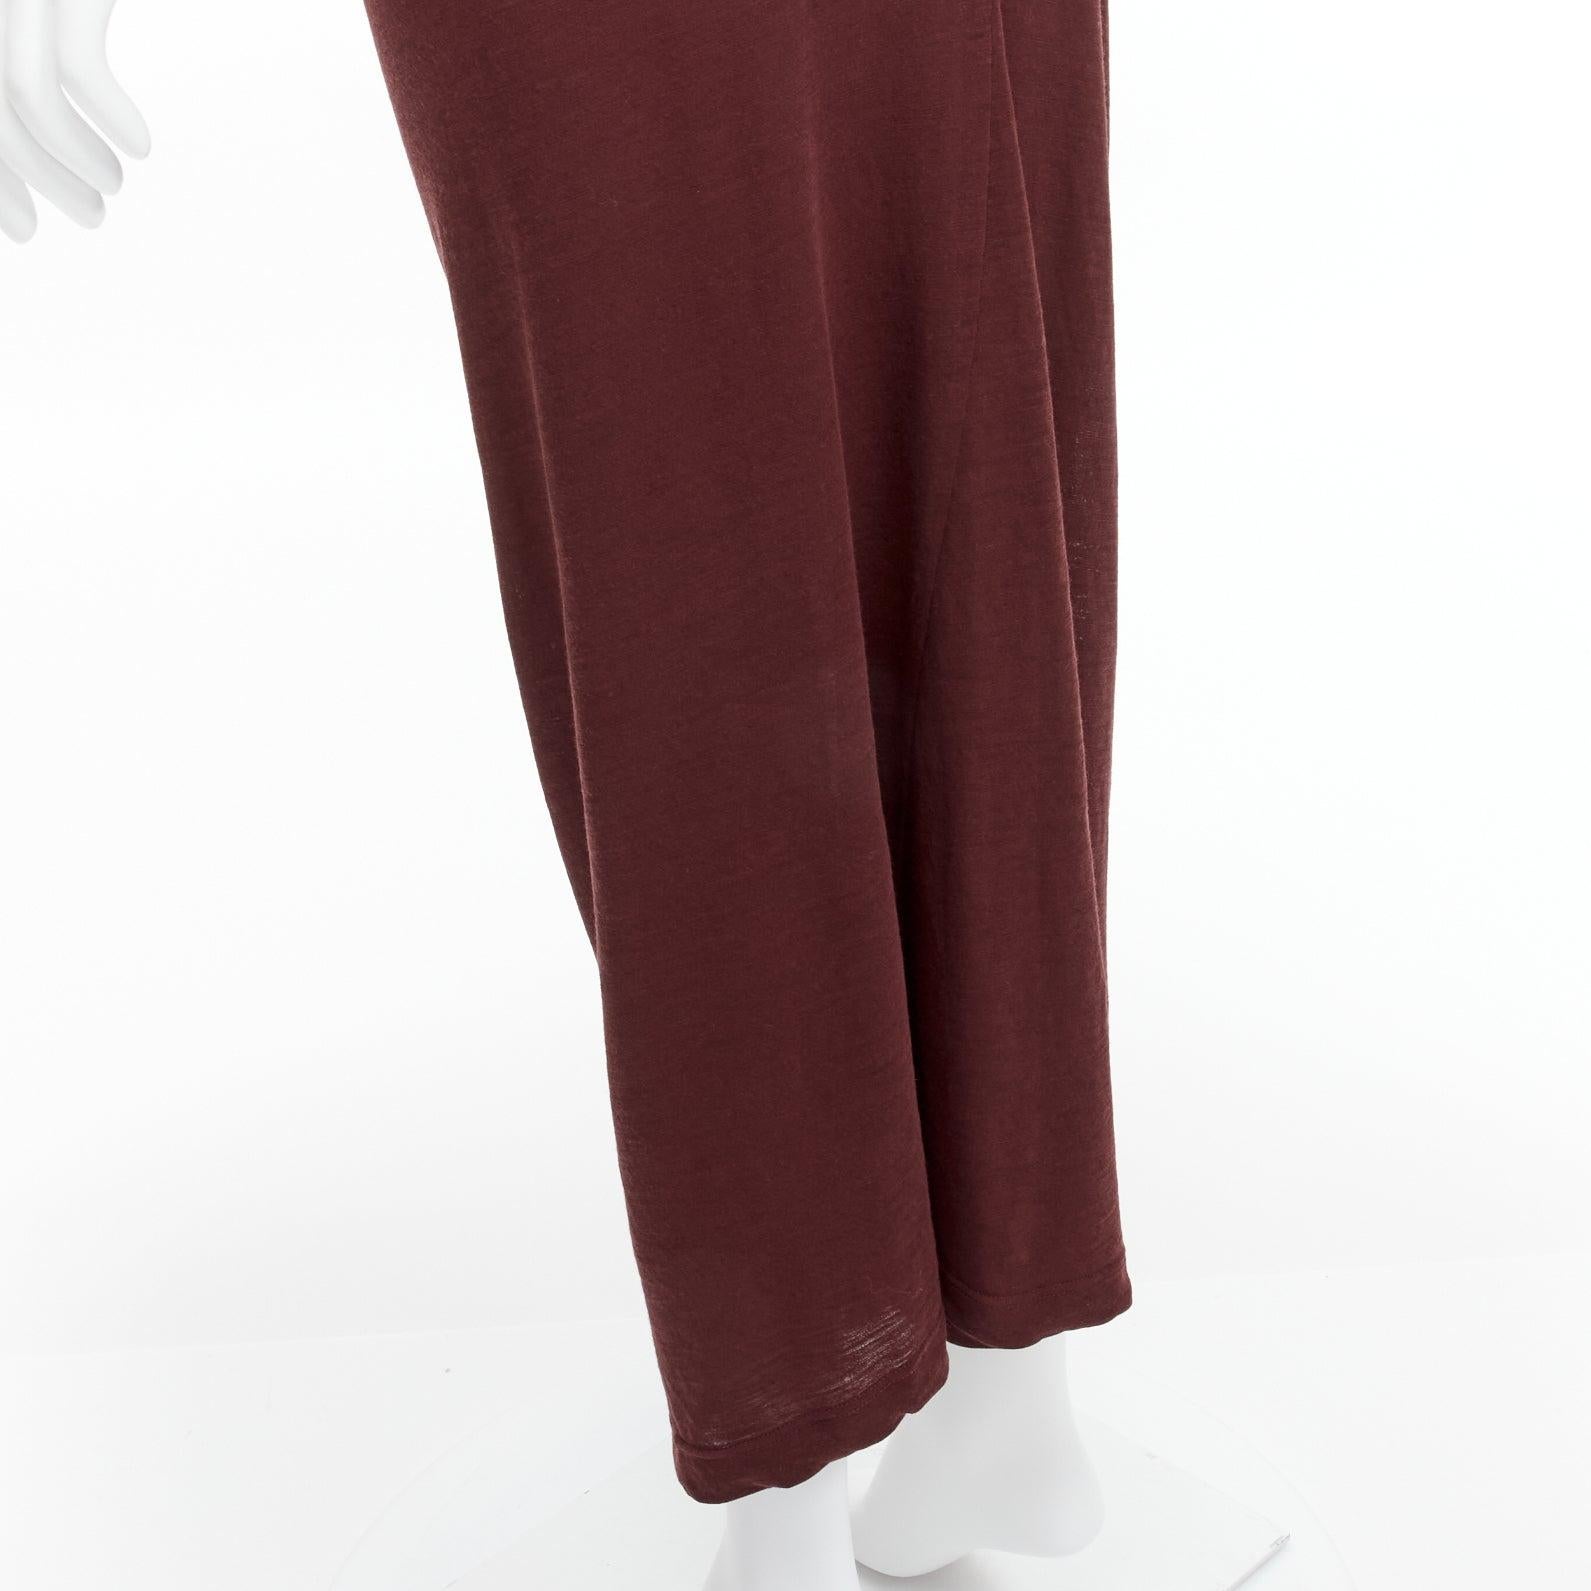 CDG COMME DES GARCONS burgundy brown bias cut stretch top midi skirt set S For Sale 5